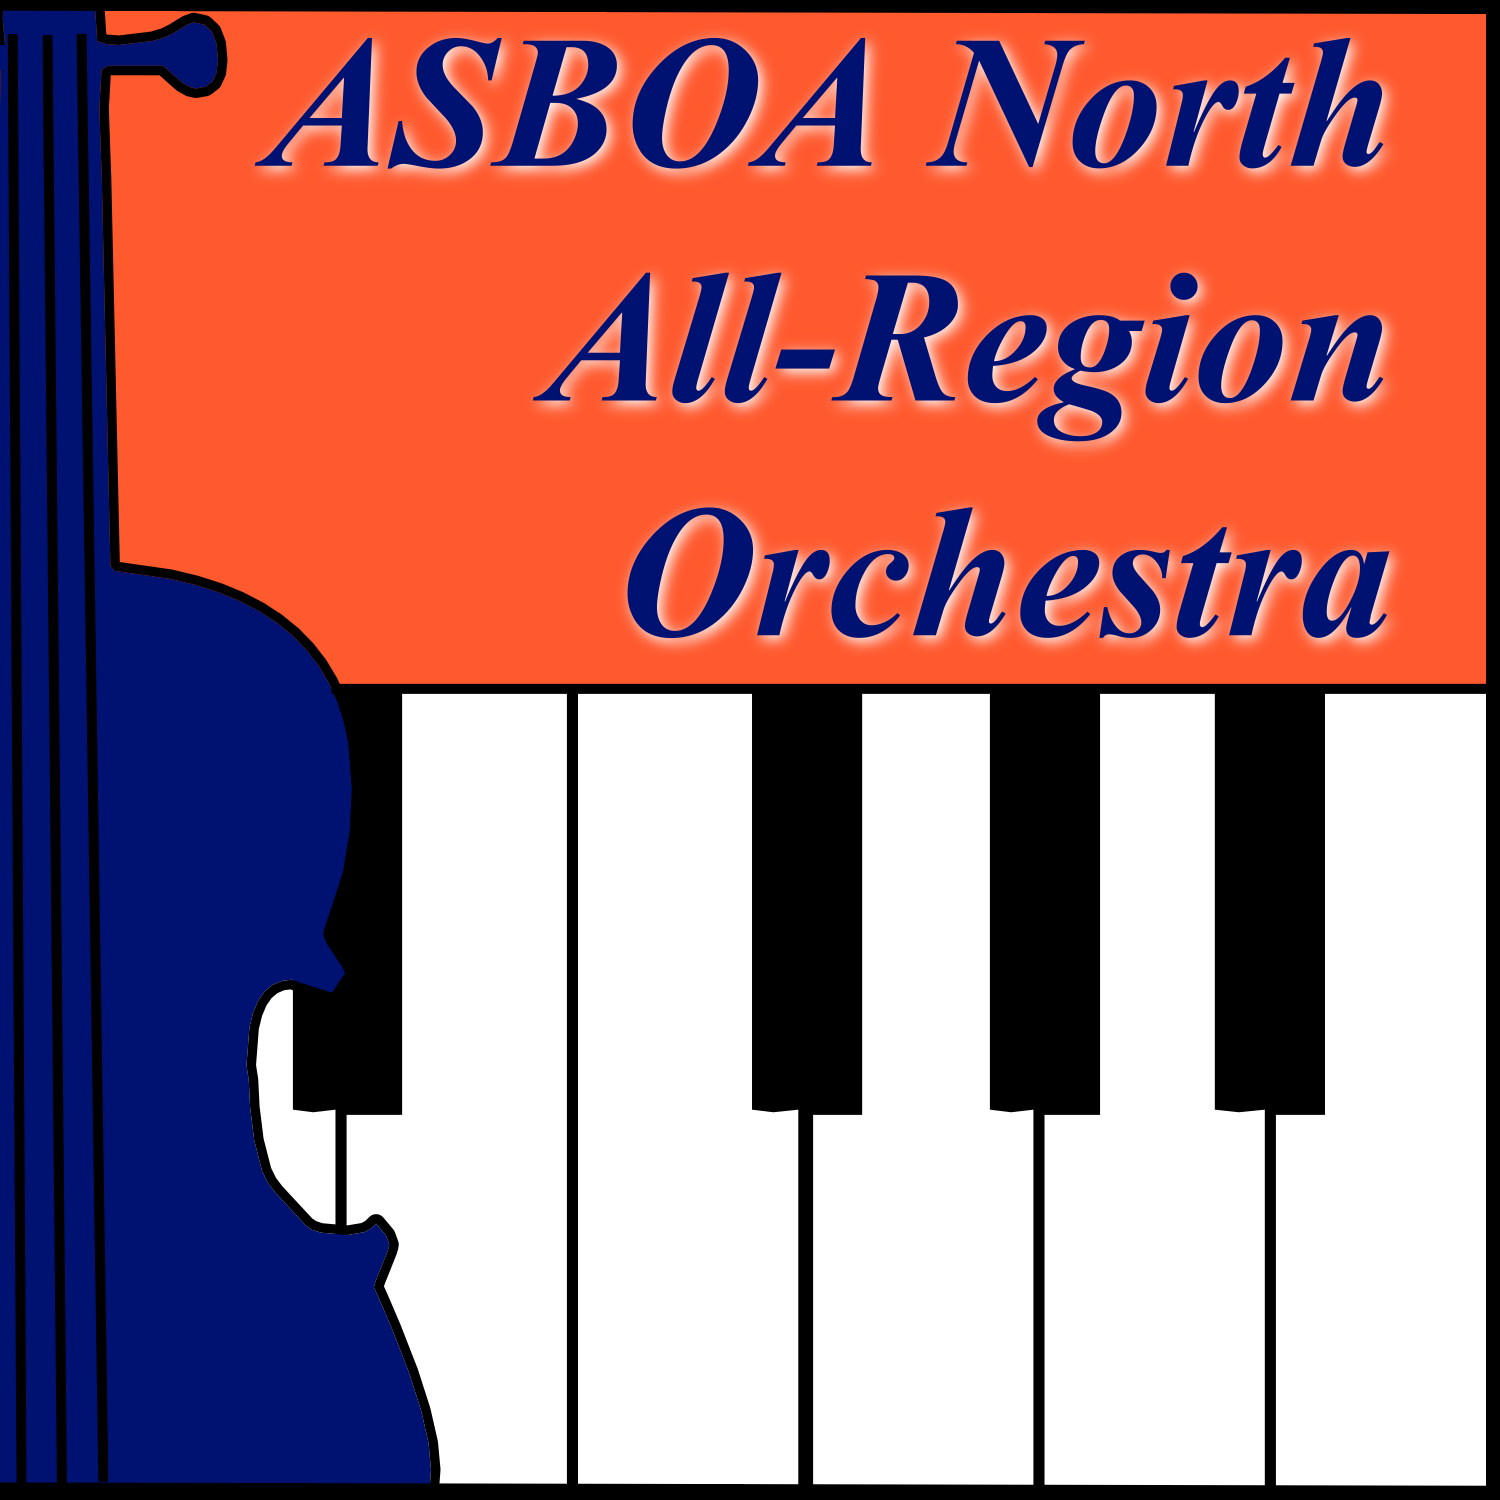 ASBOA North All-Region Orchestras